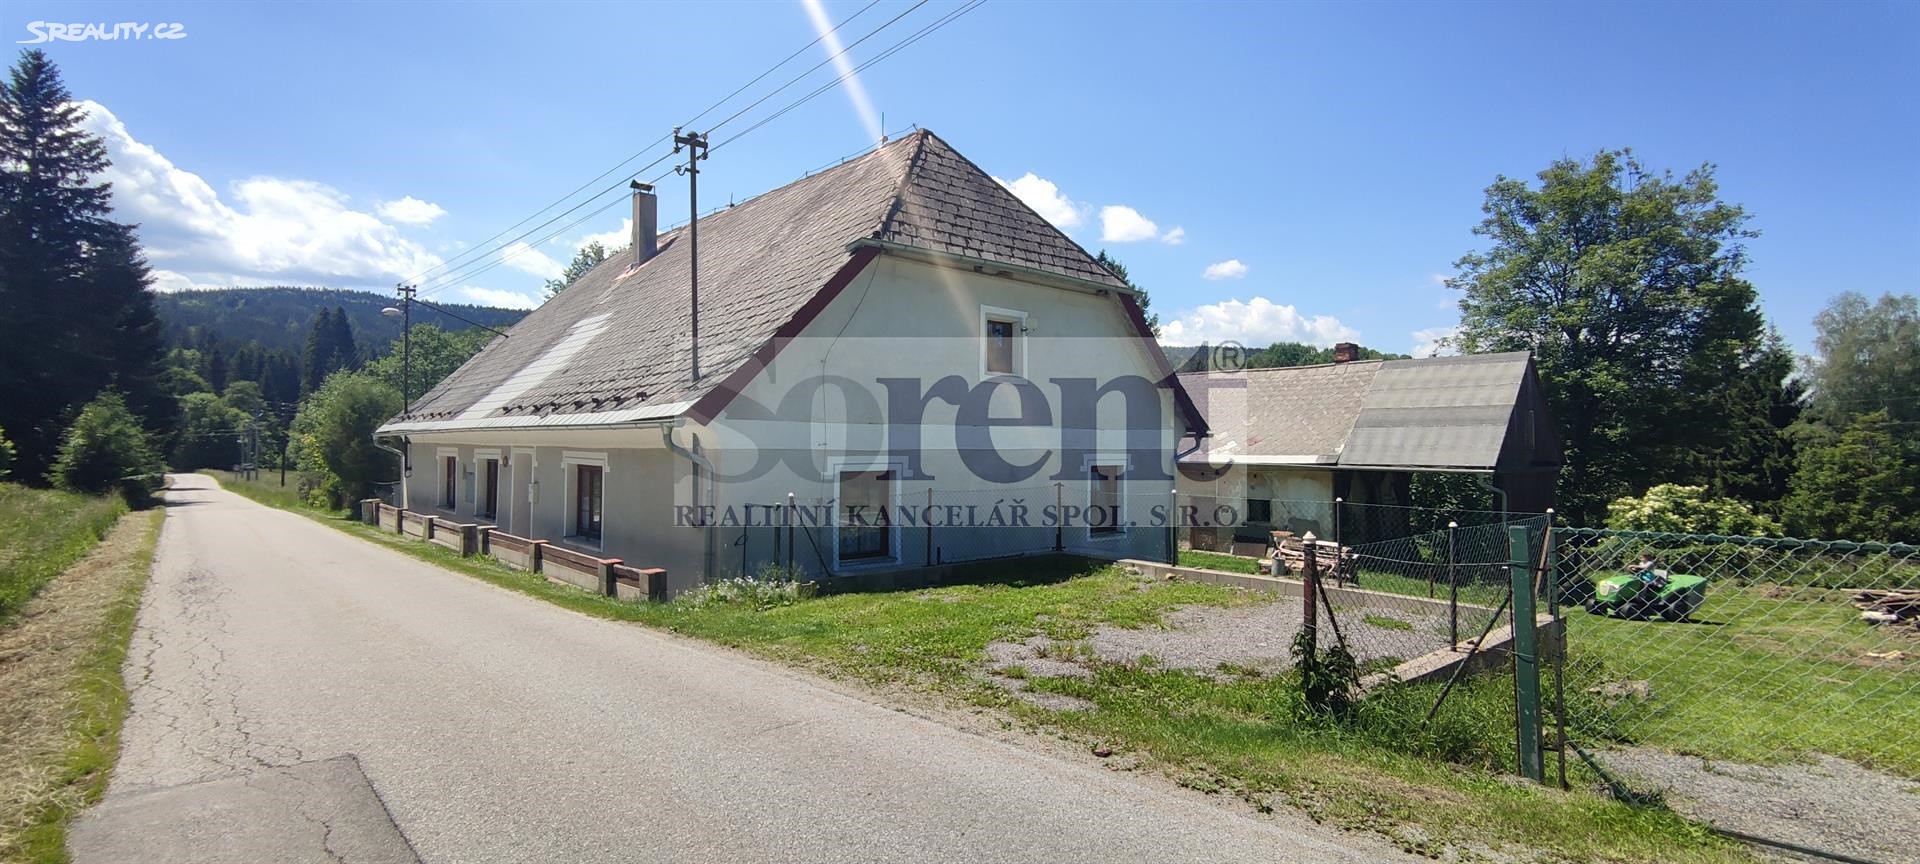 Prodej  rodinného domu 150 m², pozemek 2 087 m², Benešov nad Černou - Černé Údolí, okres Český Krumlov